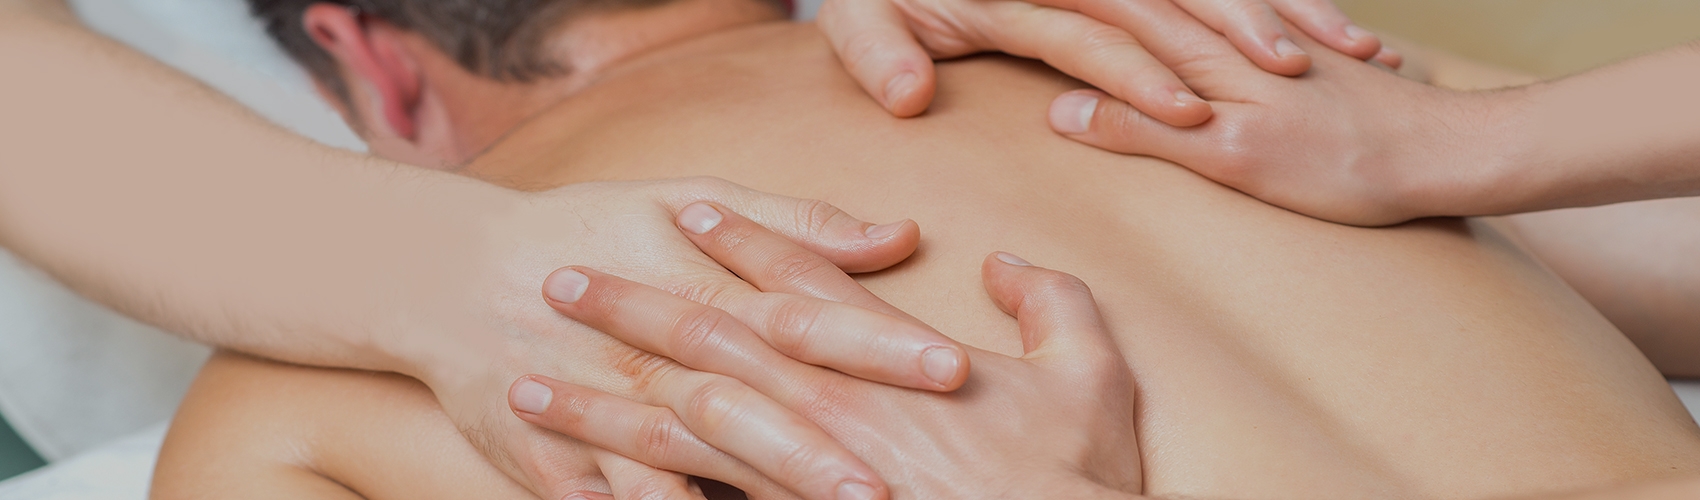 Best Four Hand Massage at Dubai's best massage spa center